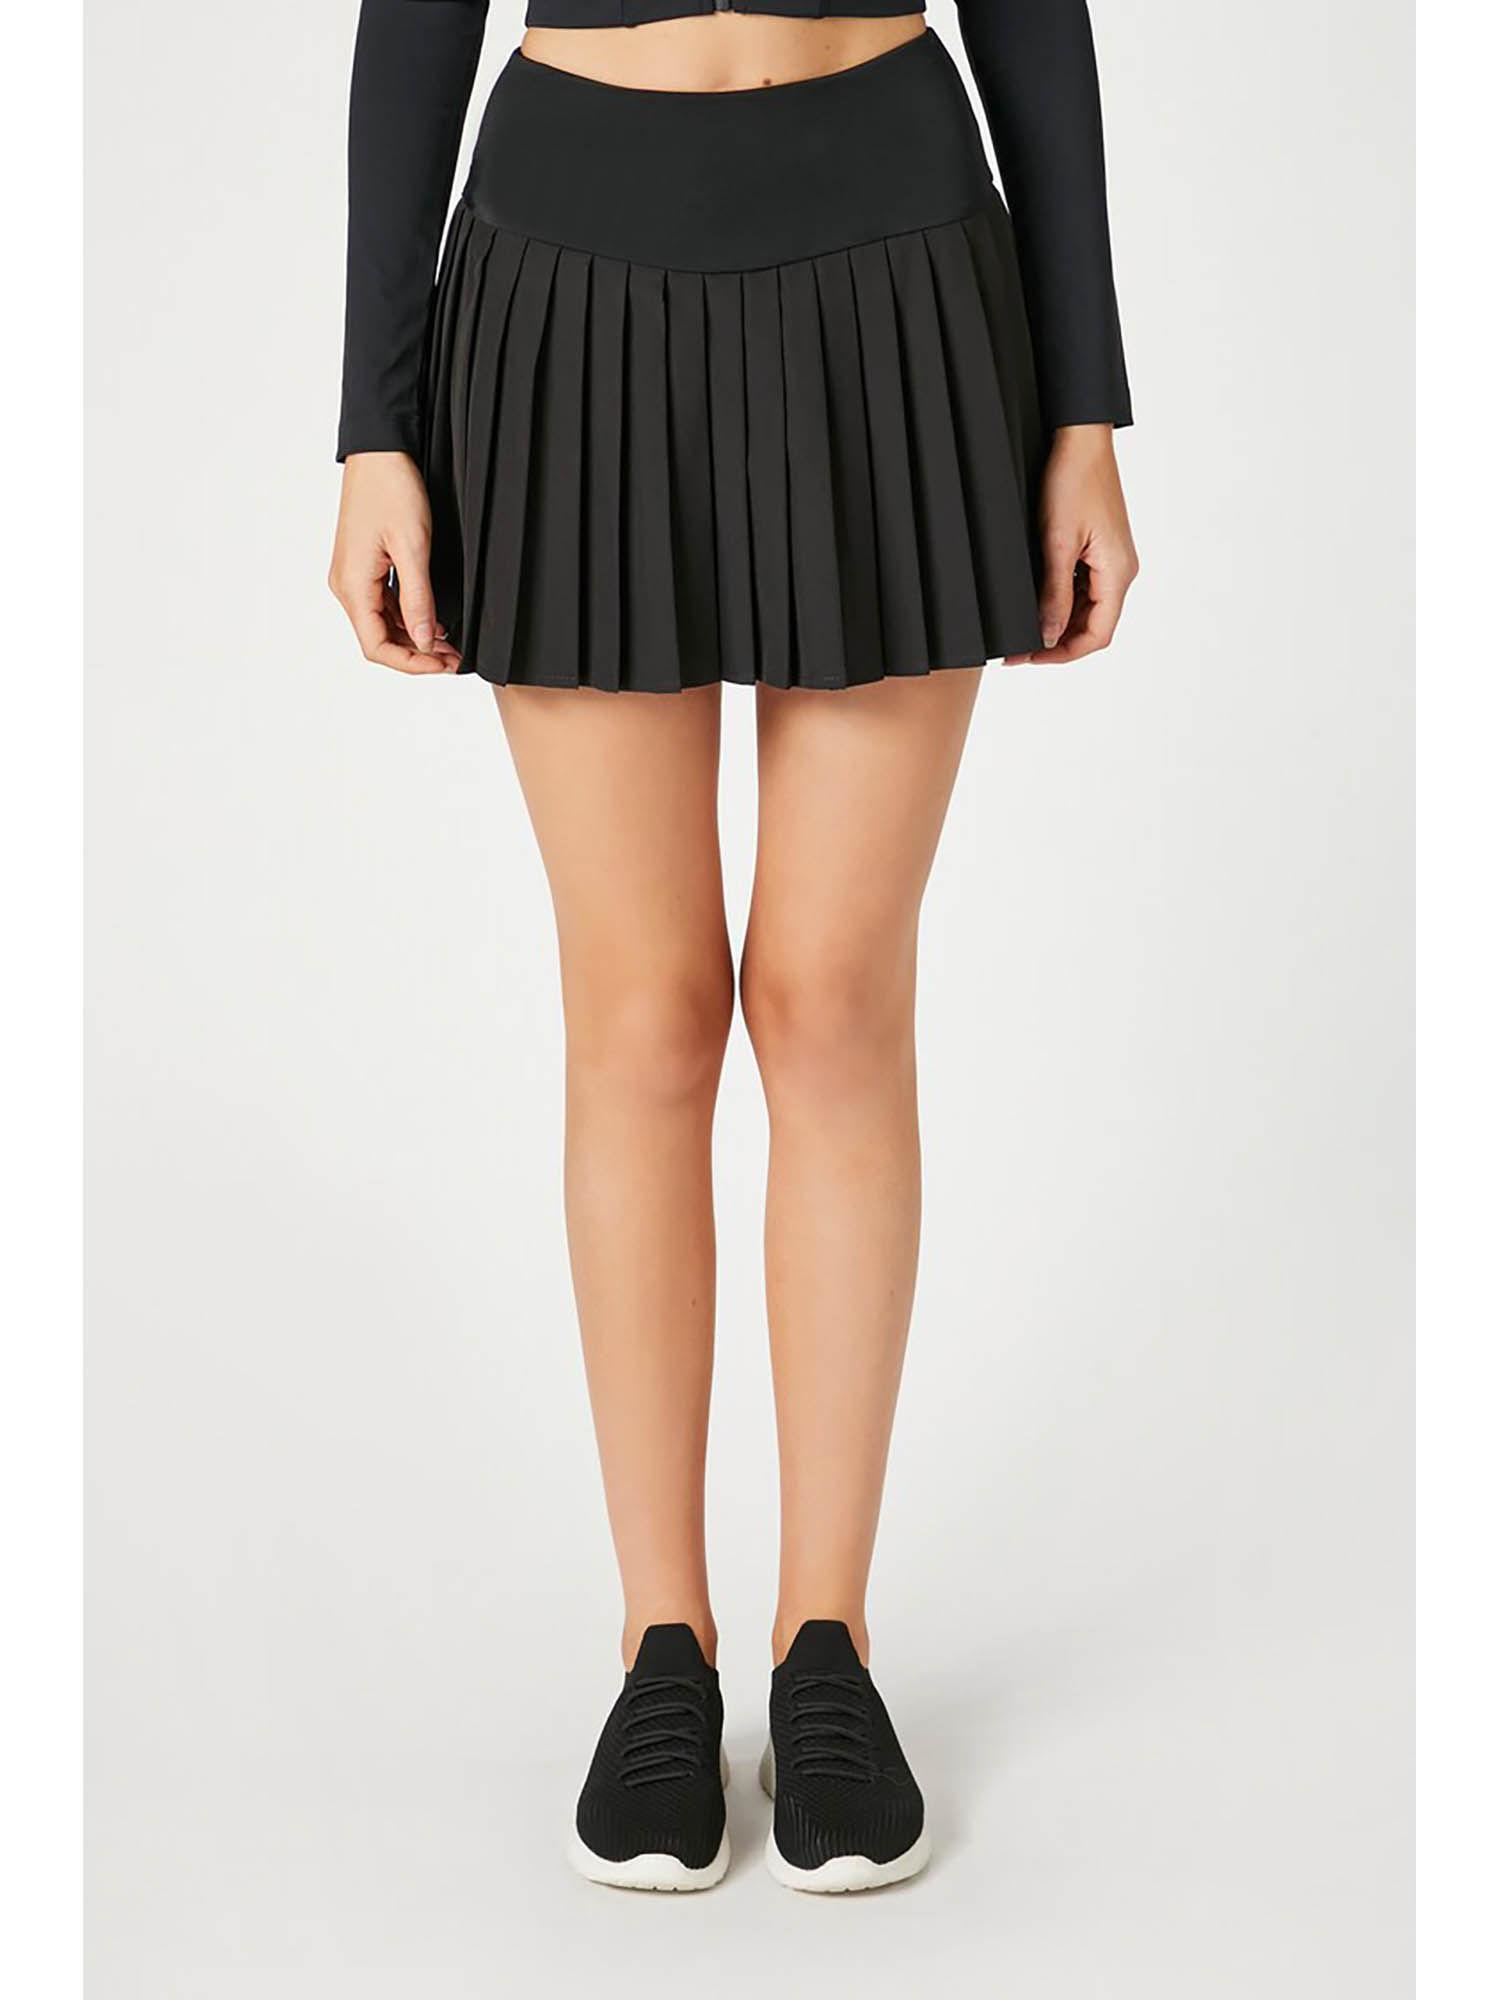 solid-black-mini-skirt